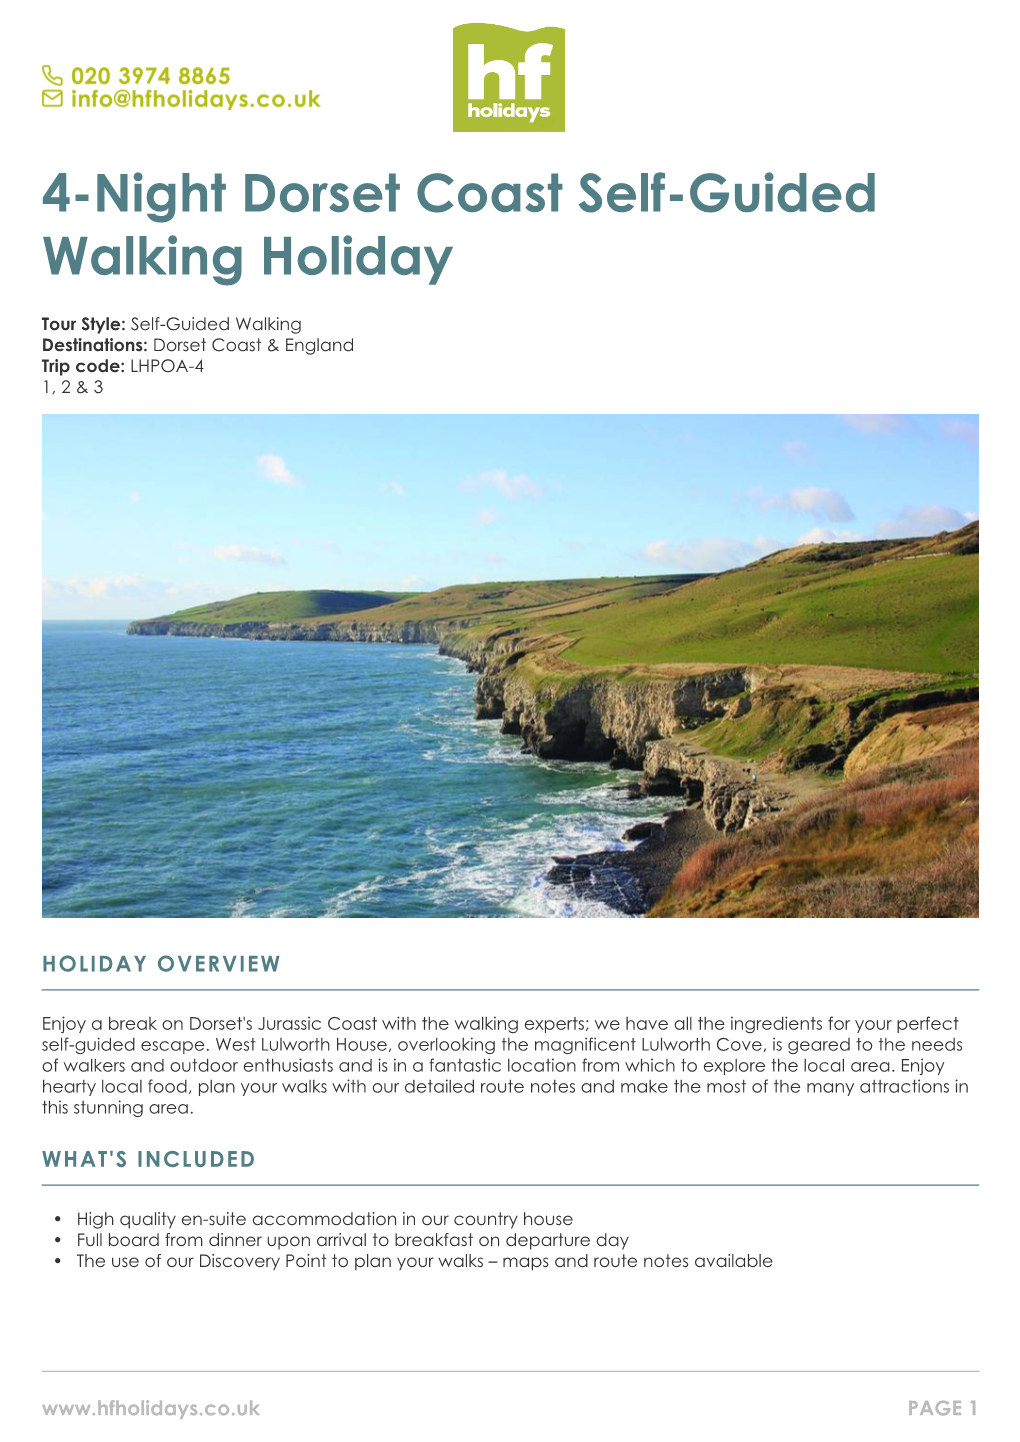 4-Night Dorset Coast Self-Guided Walking Holiday